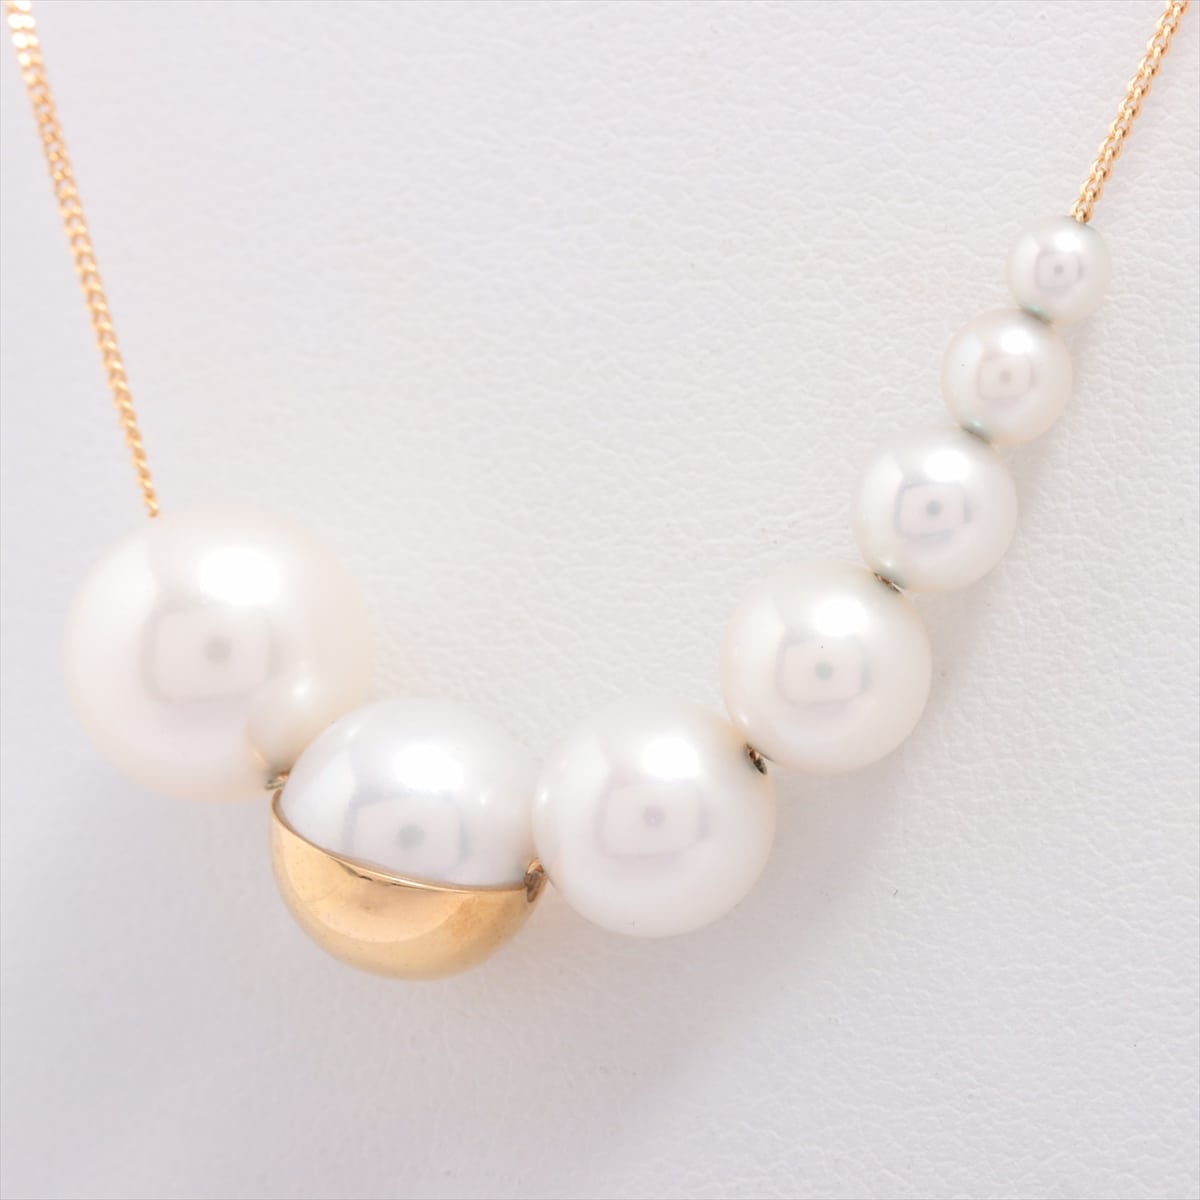 TASAKI M/G shells Pearl Necklace 750(YG) 6.2g